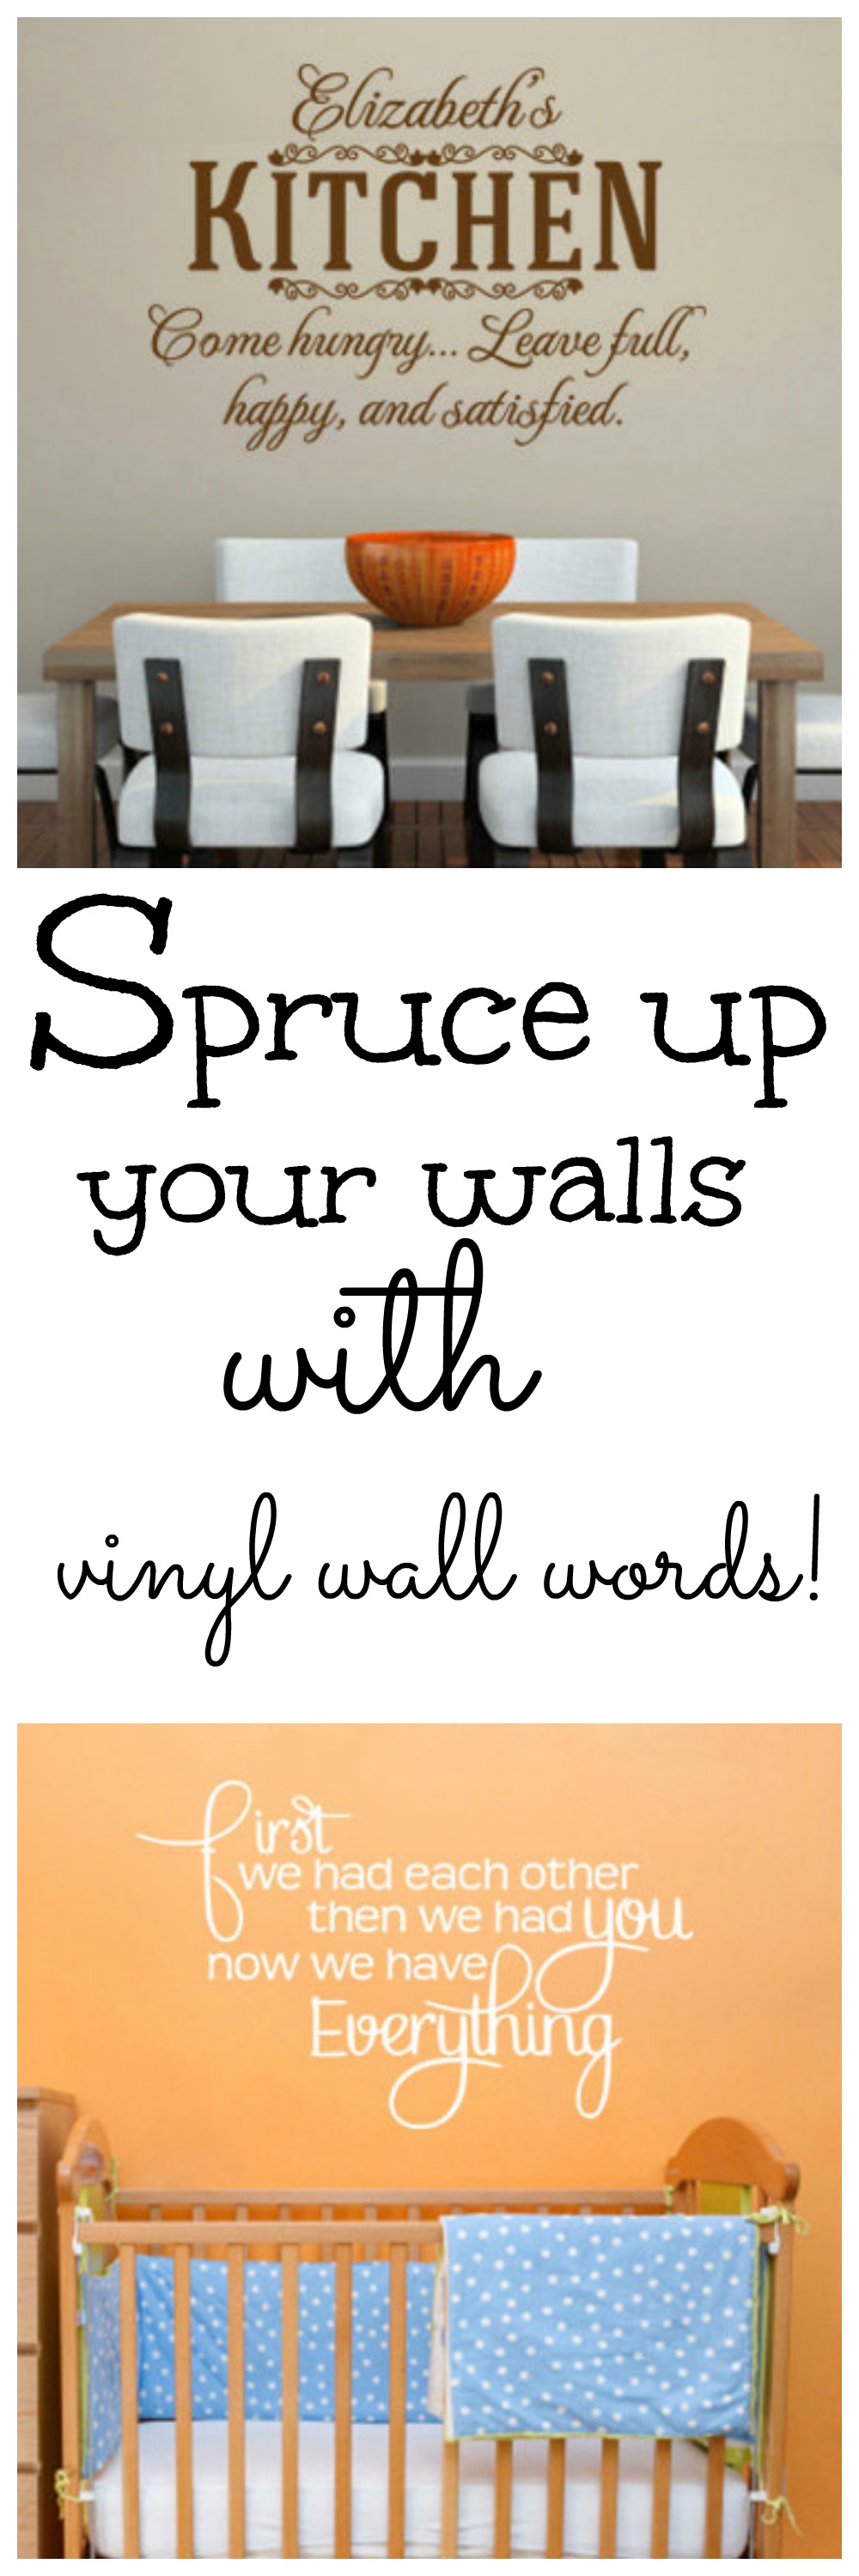 vinyl wall words